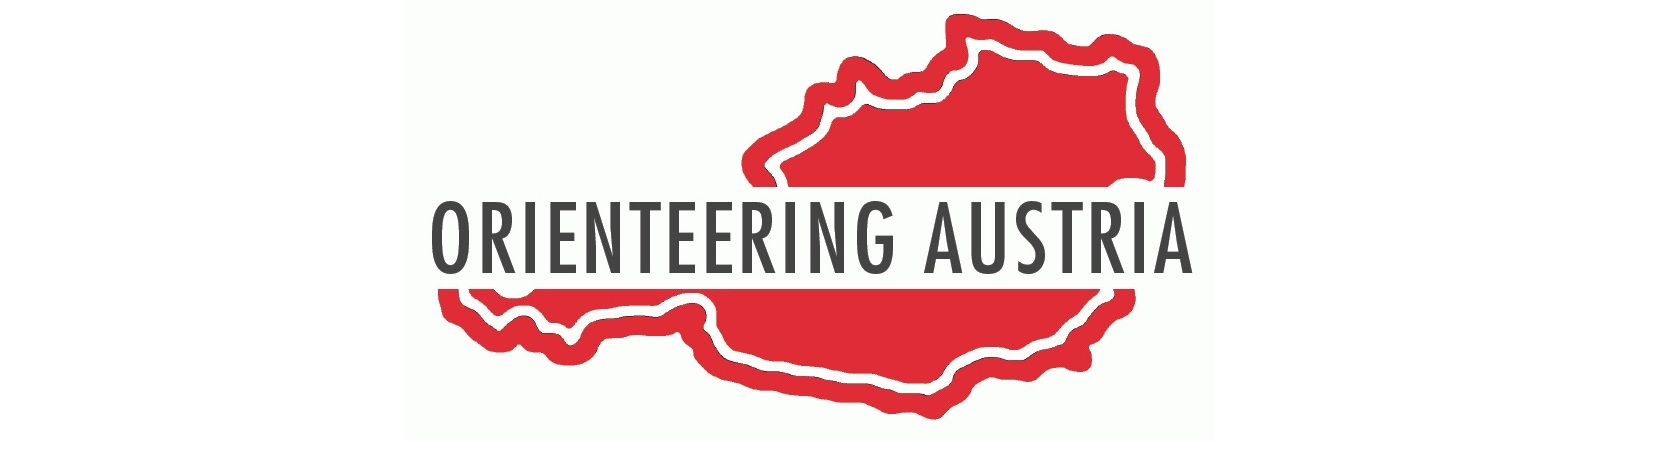 austrian orienteering federation